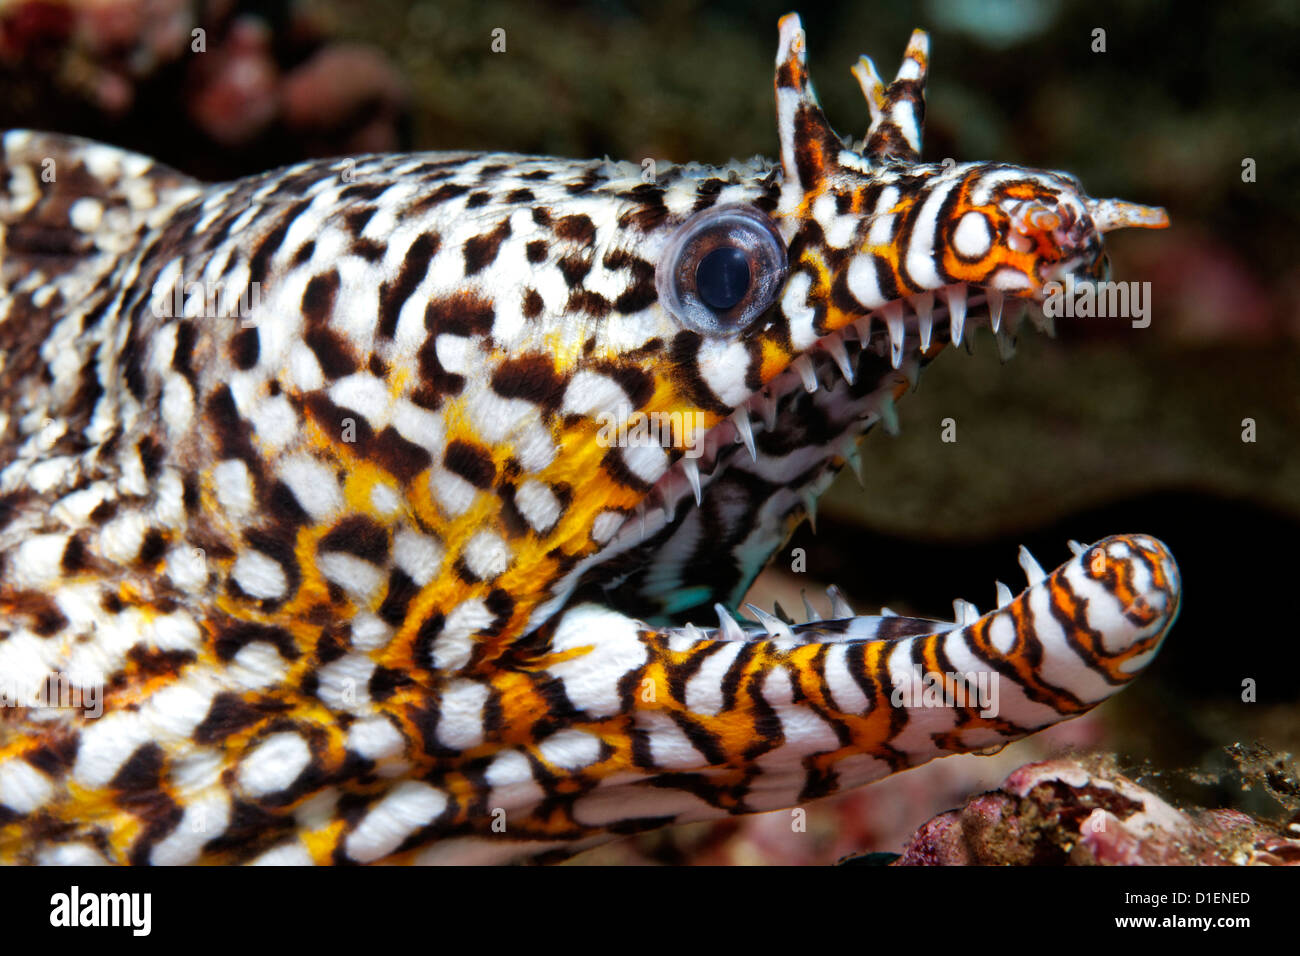 Leopard moray eel (Enchelycore pardalis), Mirbat, Oman, Indian Ocean, underwater shot Stock Photo